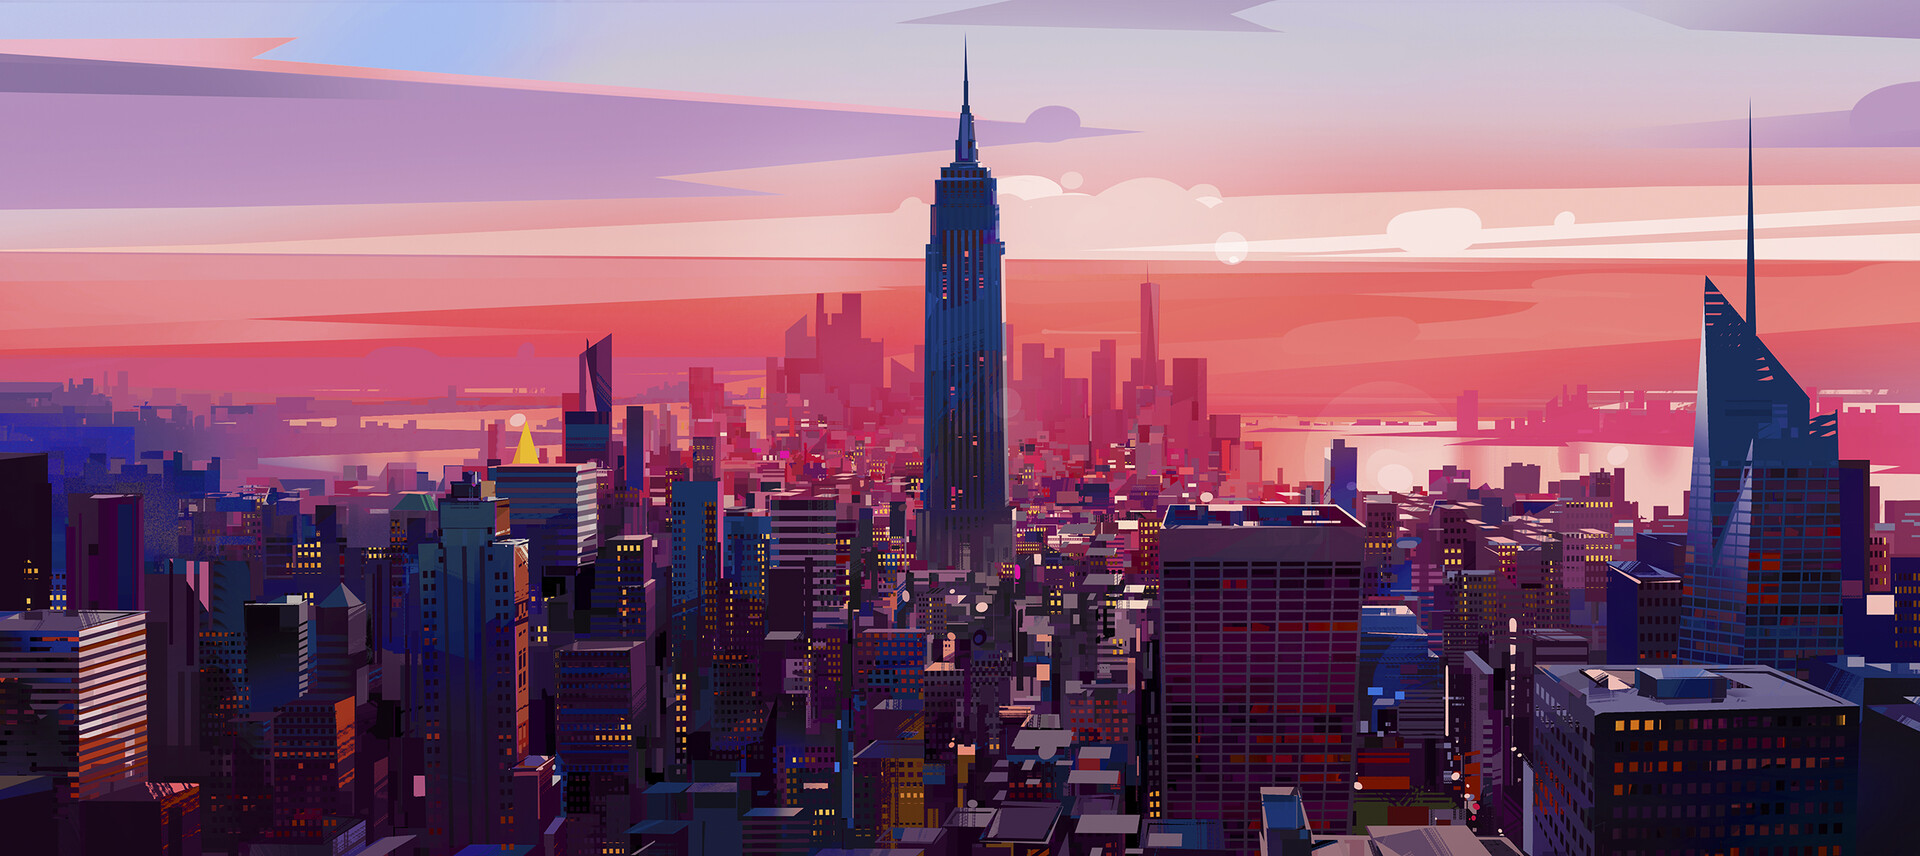 General 1920x856 artwork digital art city building Empire State Building skyscraper cityscape sky clouds sunset sunset glow